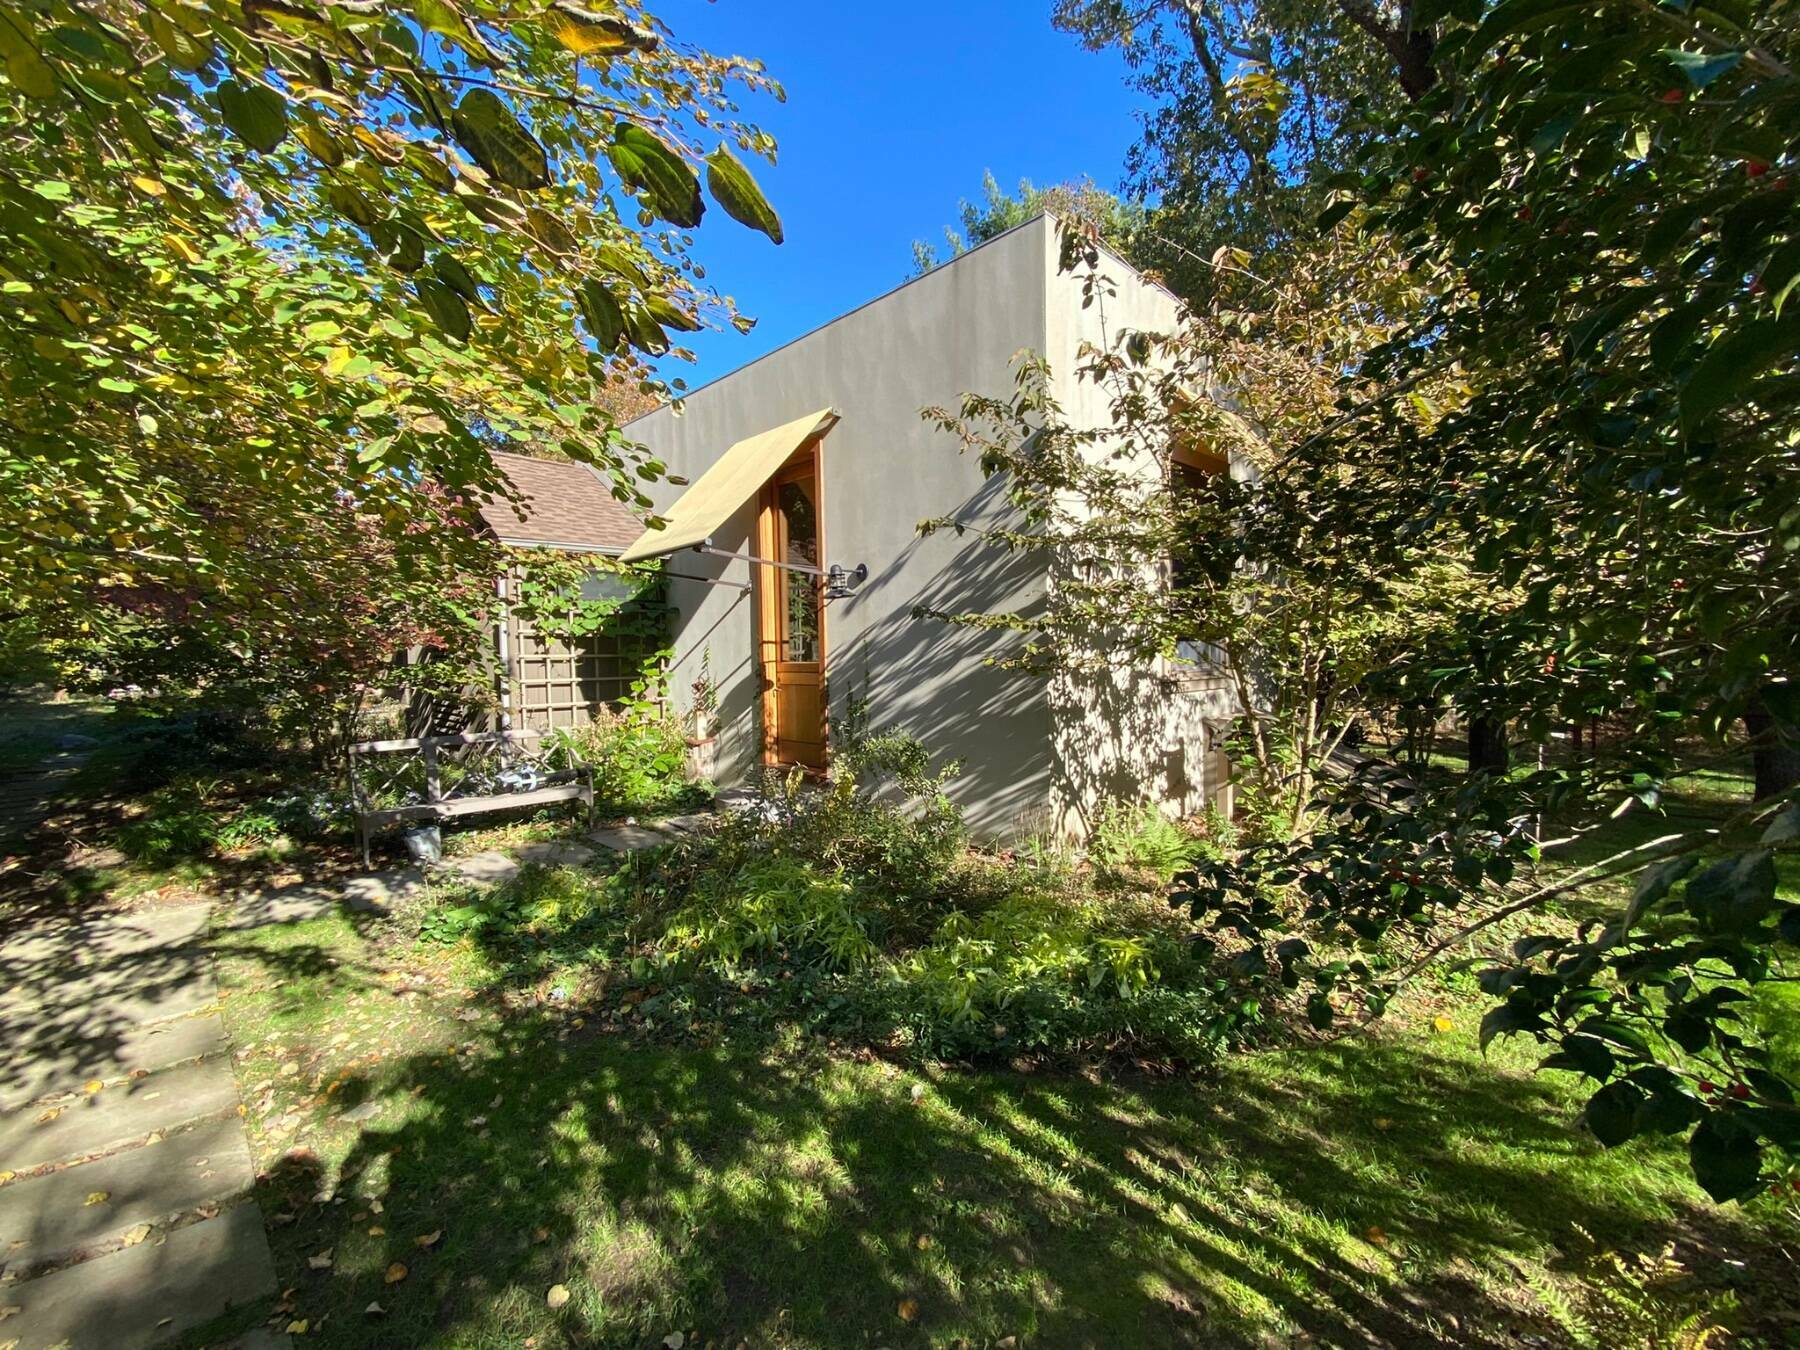 The cottage addition by minimalist architect Joe D’Urso. COURTESY SOTHEBY'S INTERNATIONAL REALTY